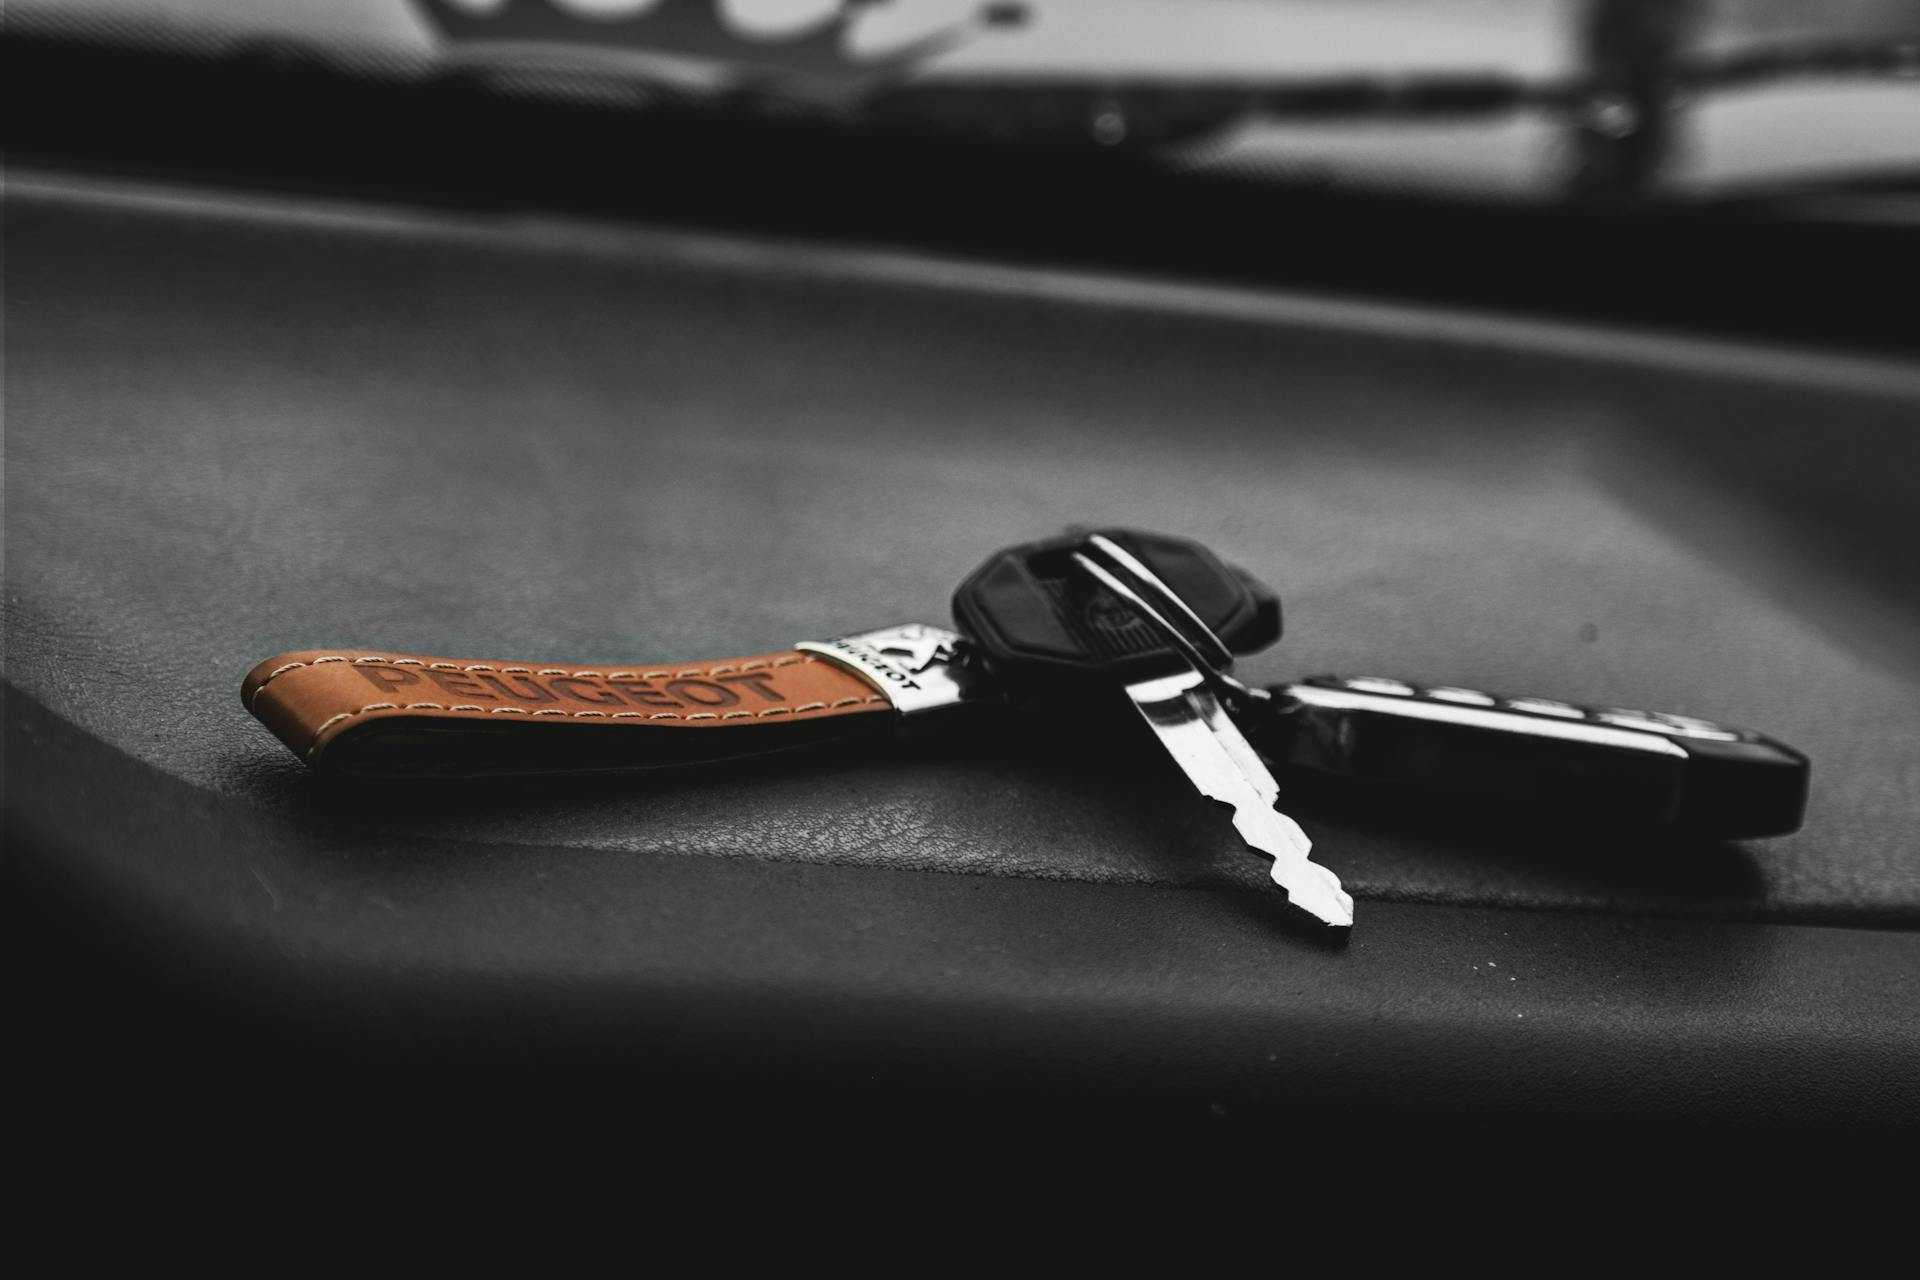 Car keys on a black surface | Source: Pexels